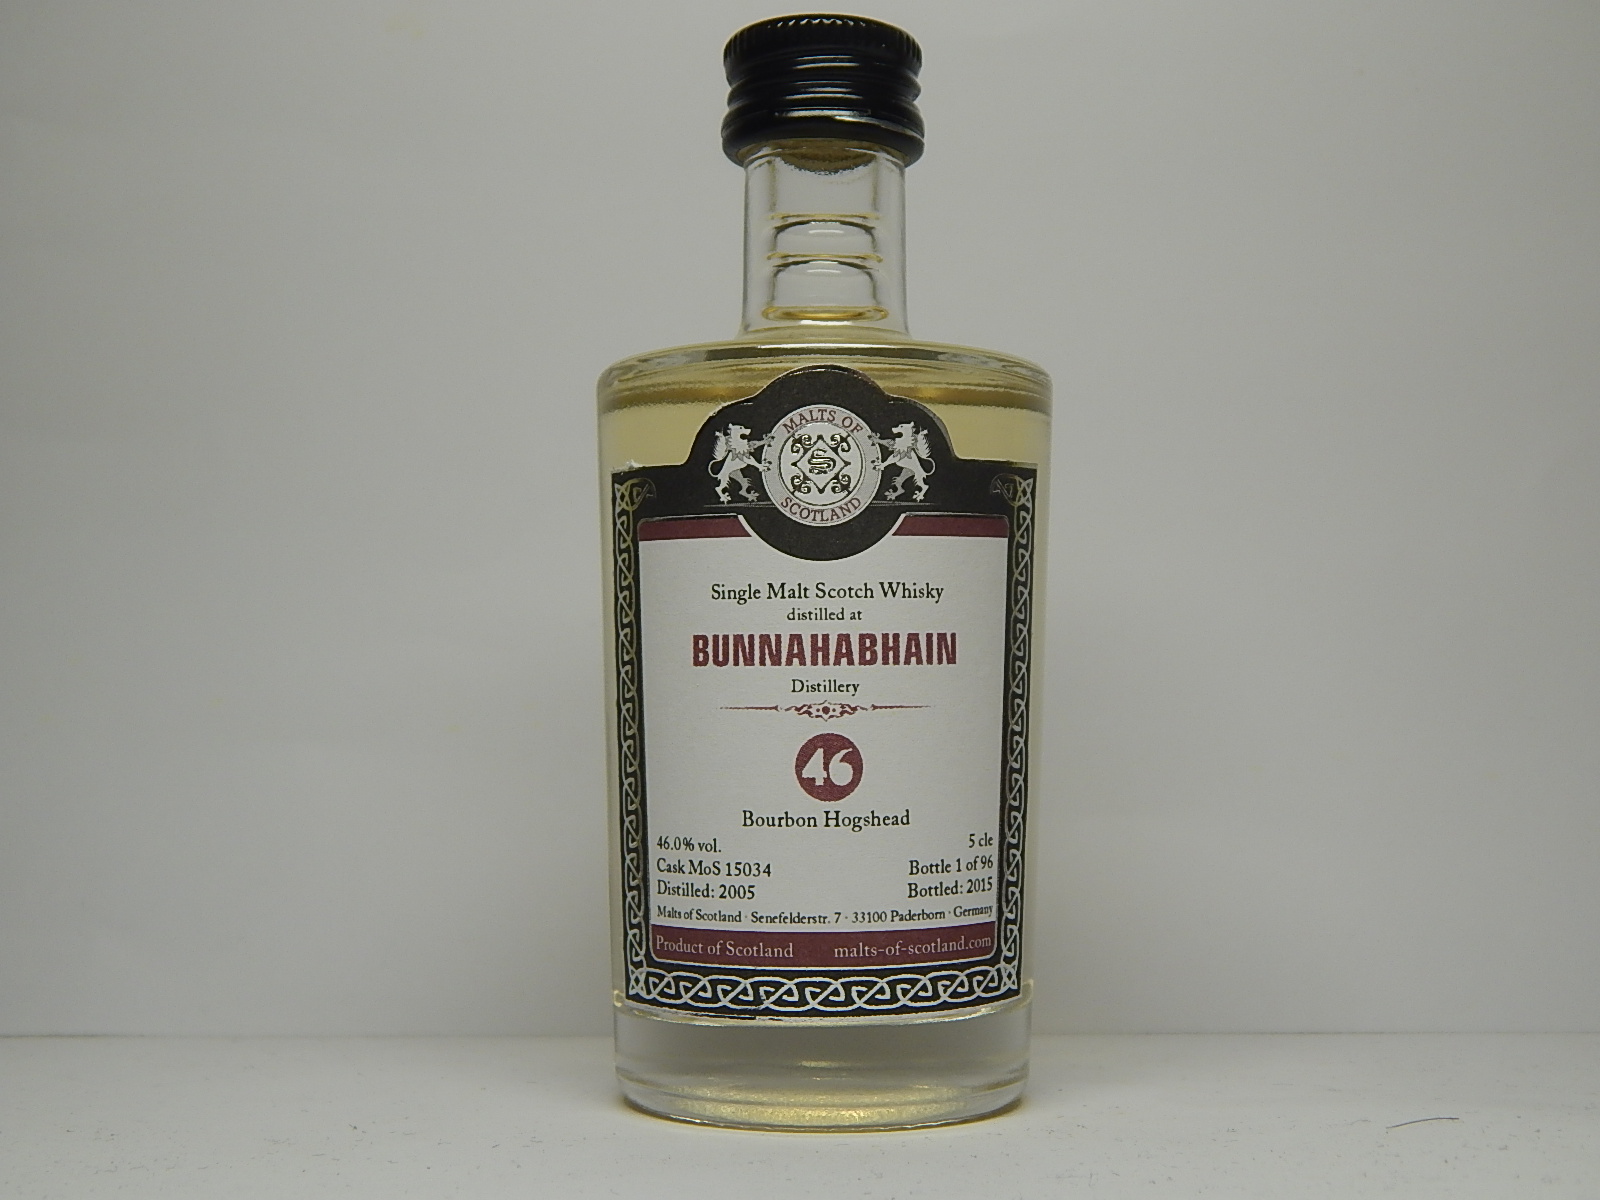 SMSW Bourbon Hogshead 10yo 2005-2015 "Malts of Scotland" 5cle 46%vol.